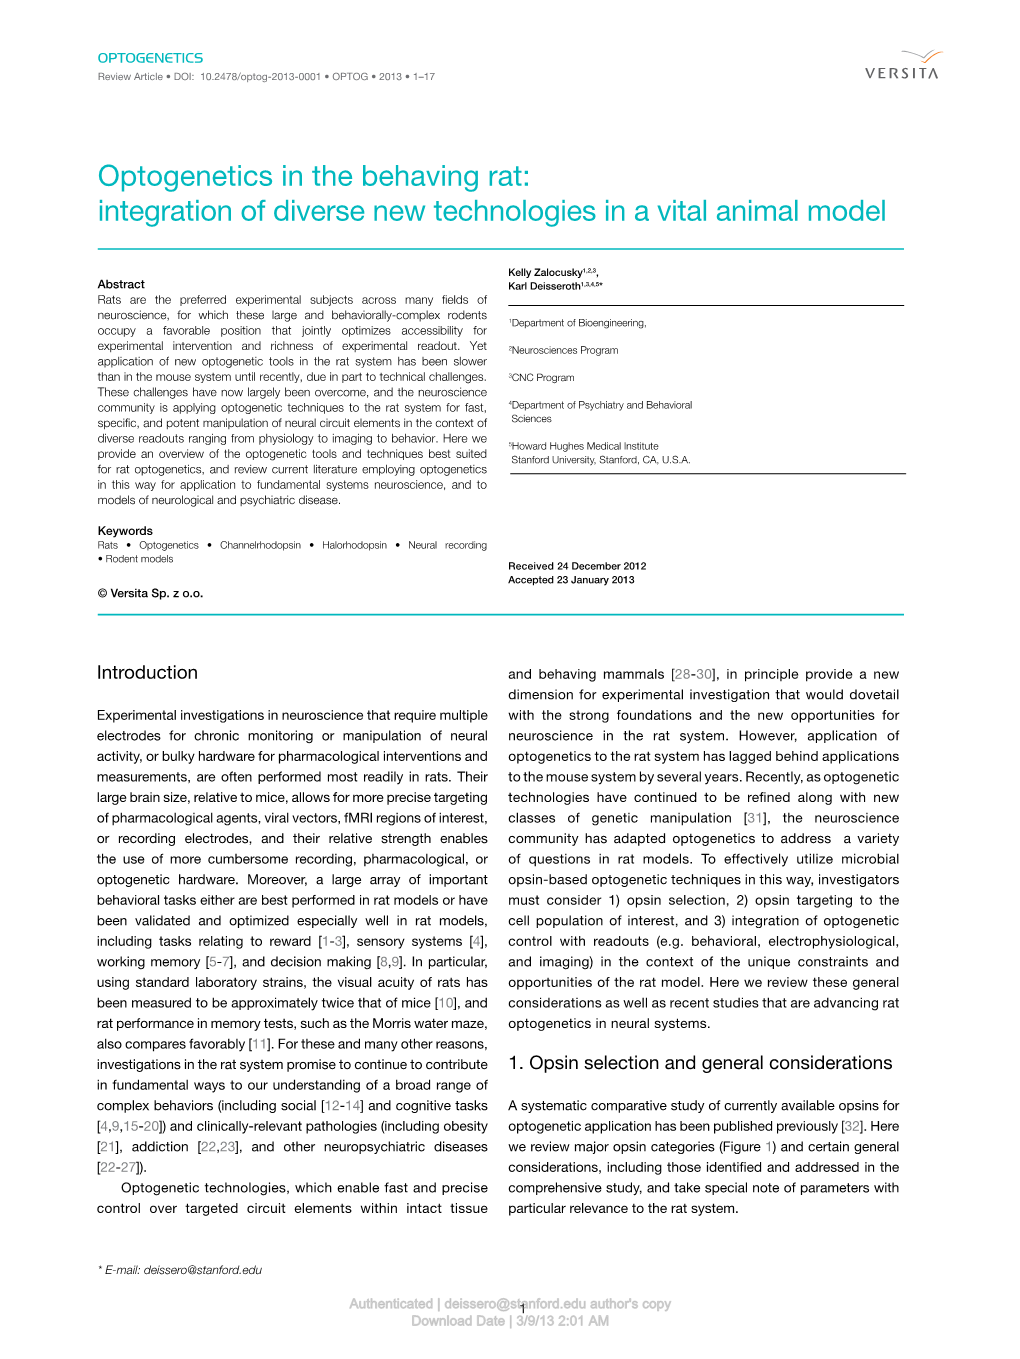 Optogenetics in the Behaving Rat: Integration of Diverse New